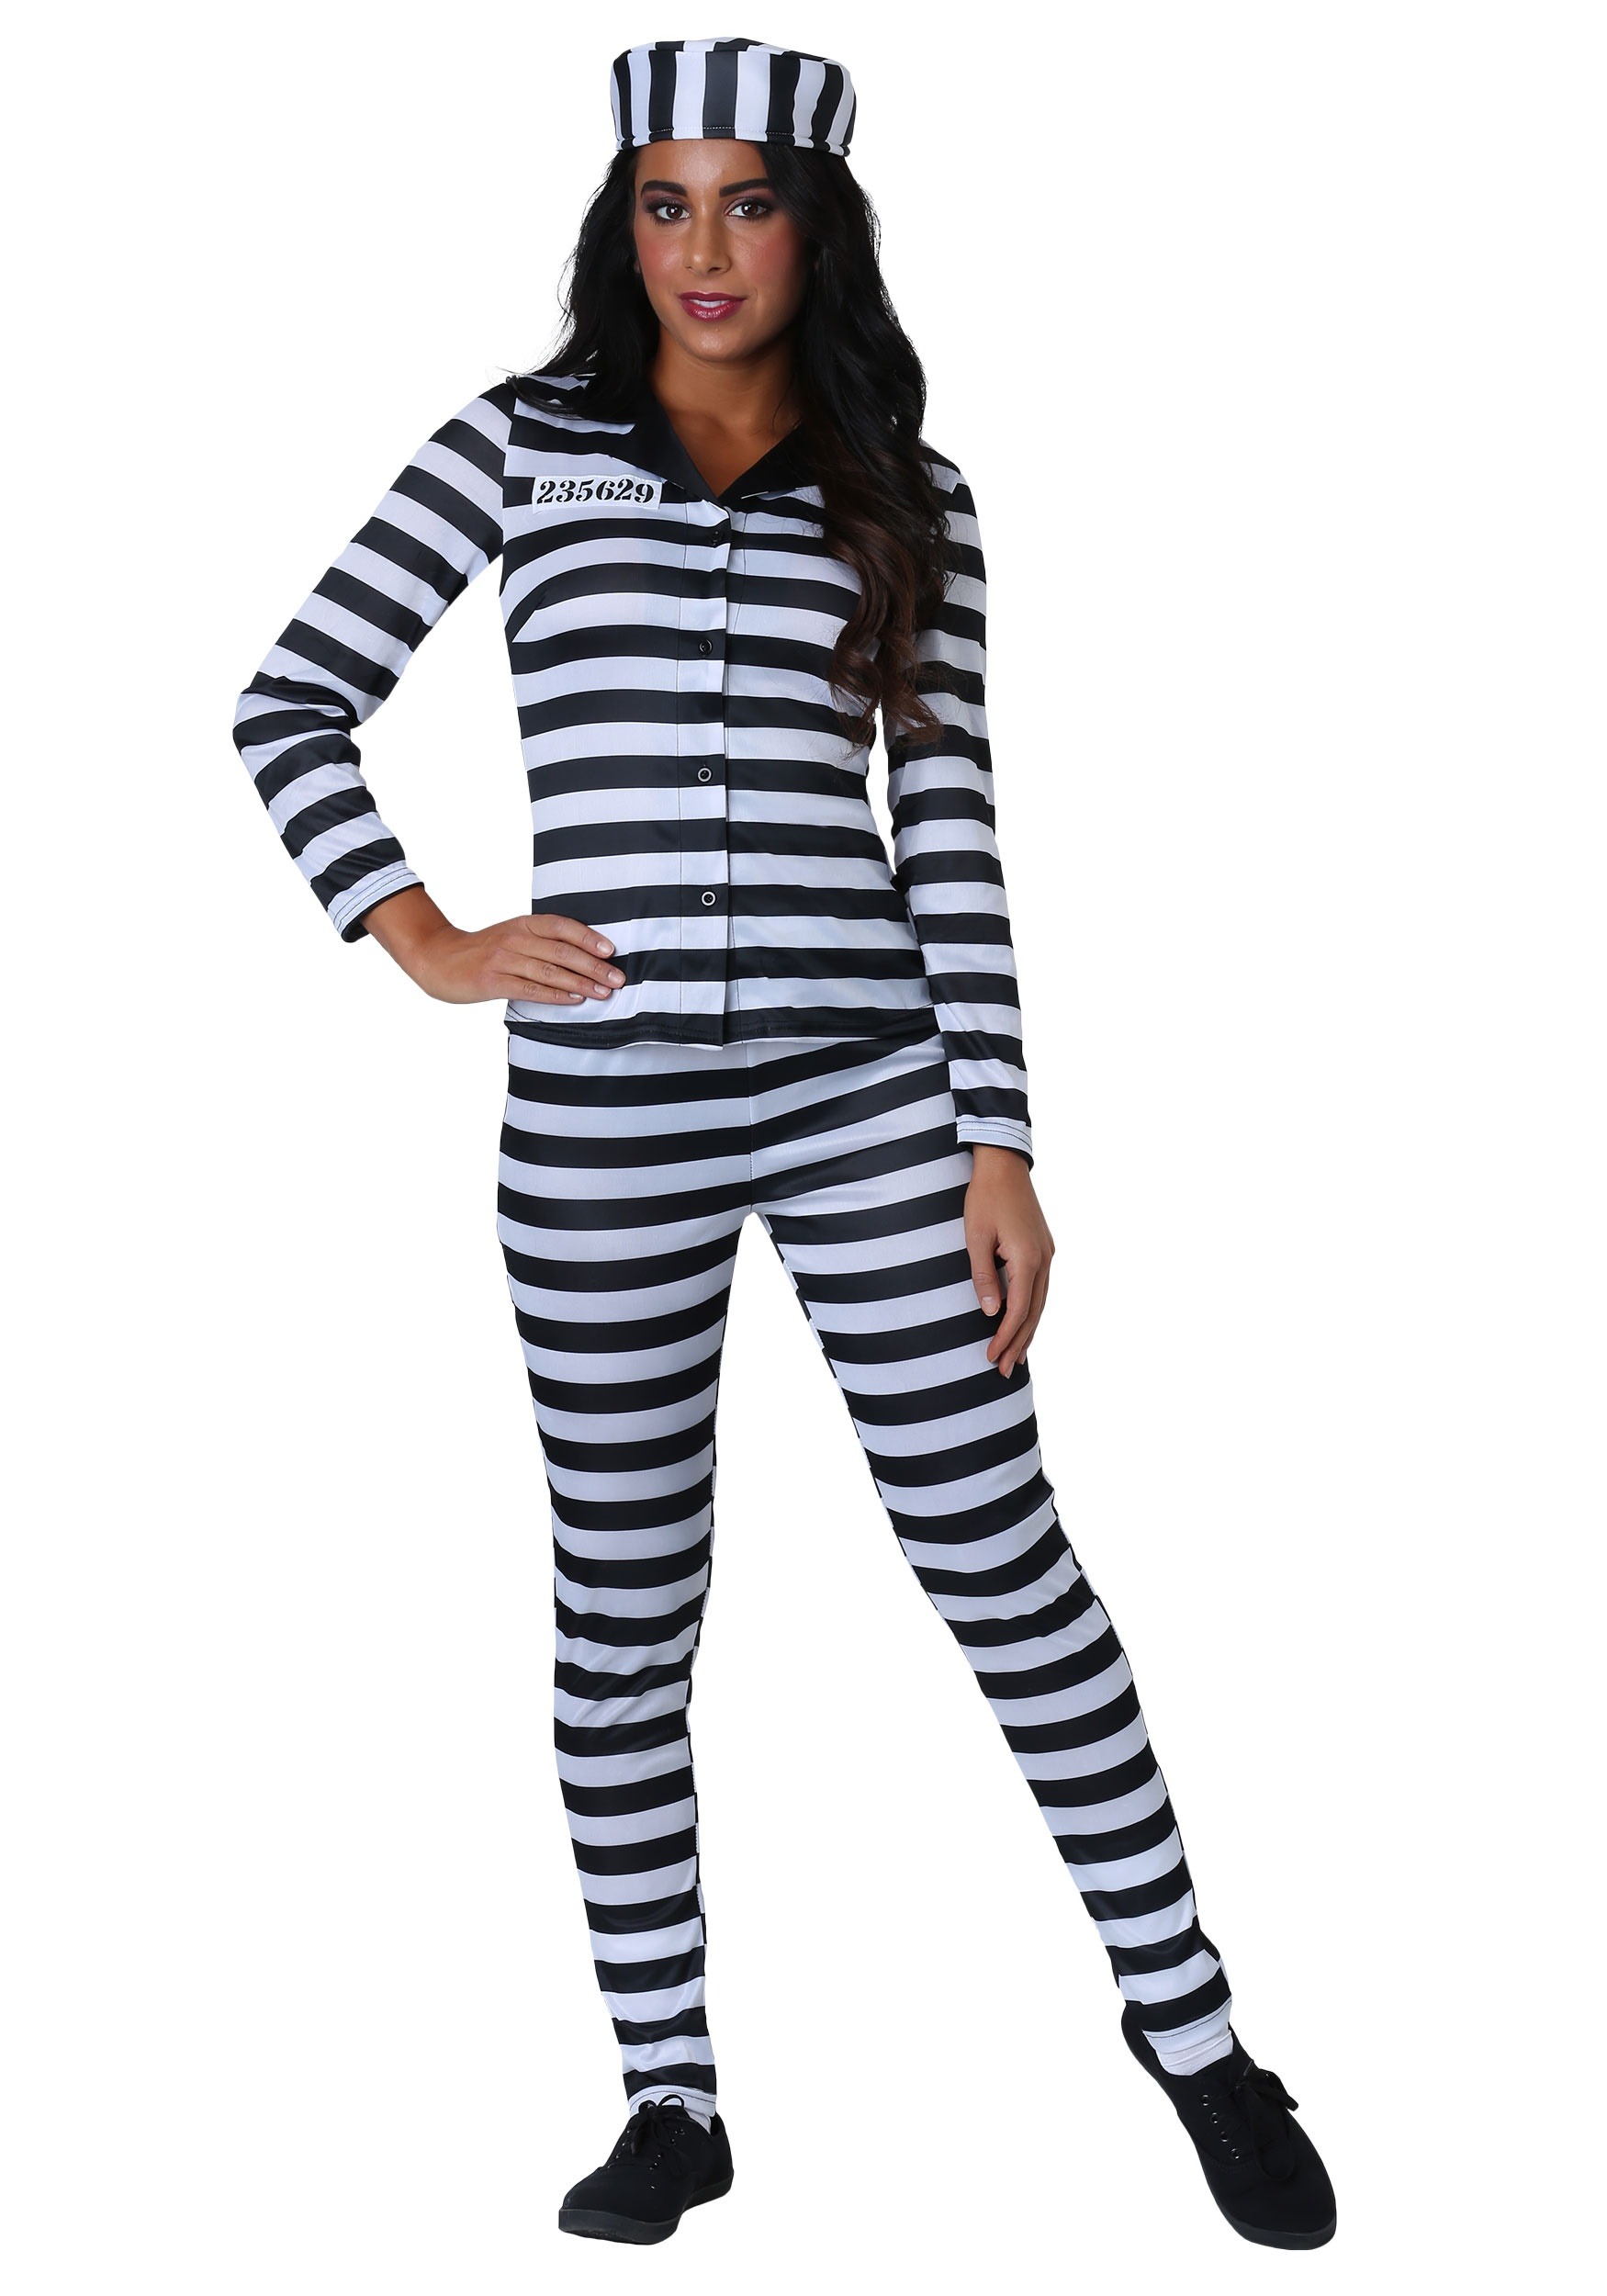 Incarcerated Cutie Fancy Dress Costume For Women